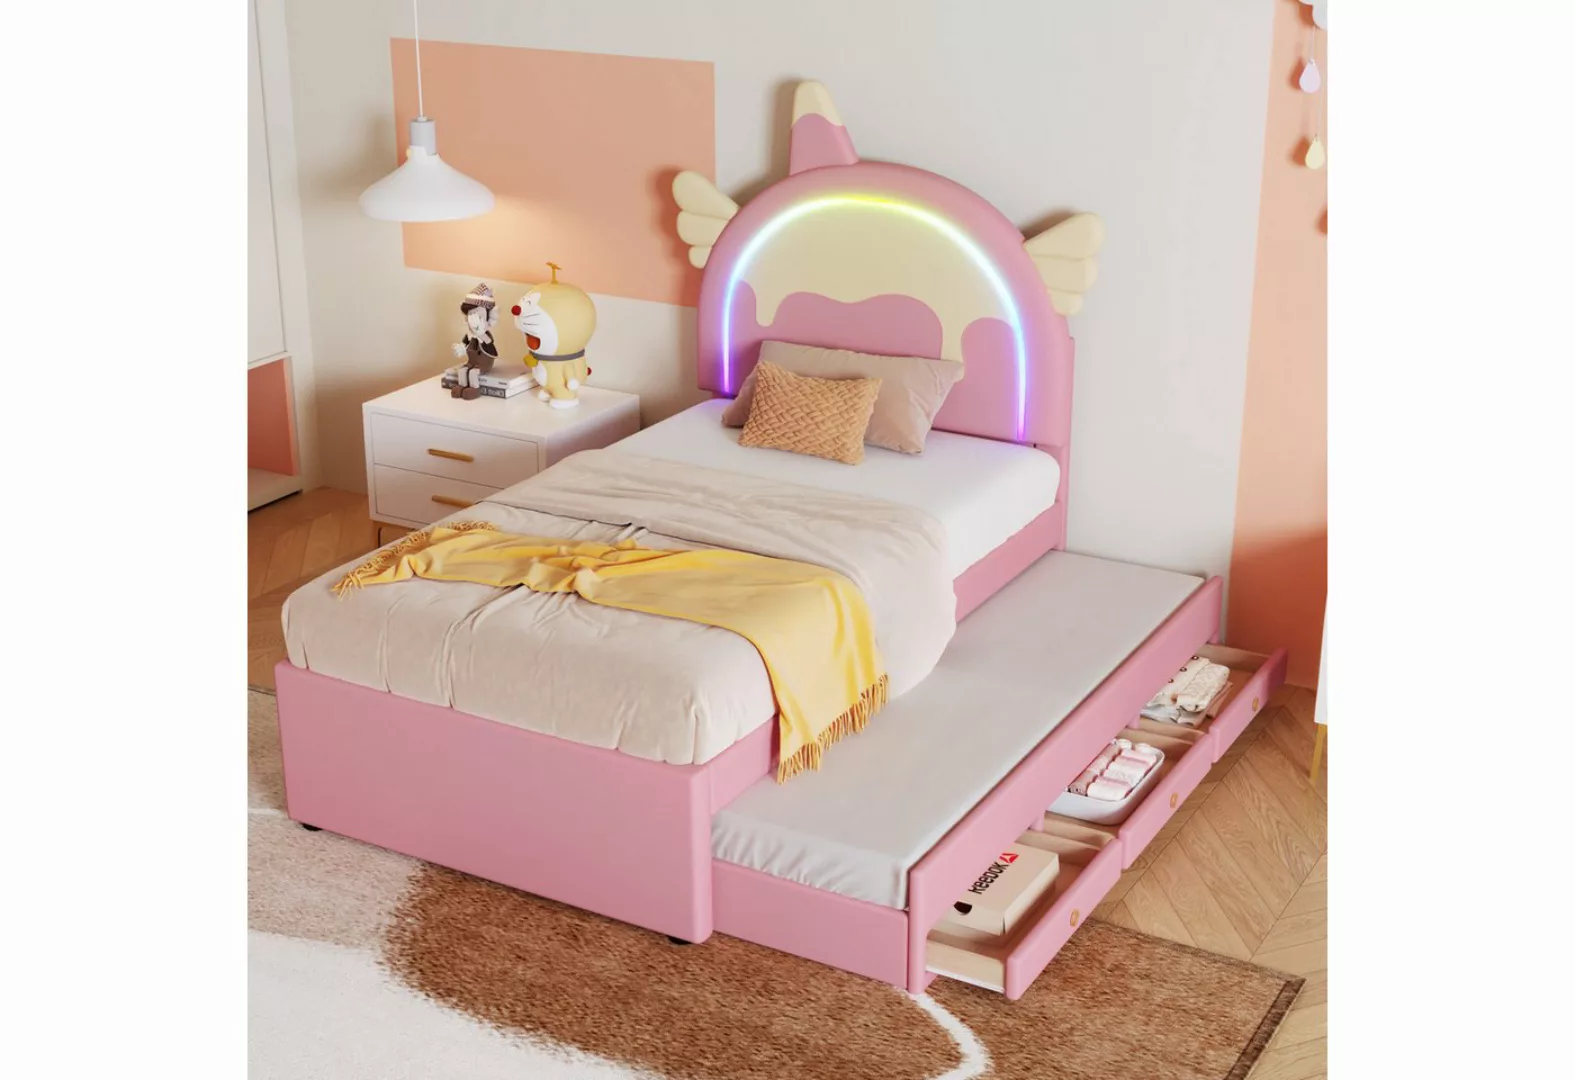 Ulife Polsterbett Kinderbett Familienbett Jugendbett mit ausziehbares Bett, günstig online kaufen